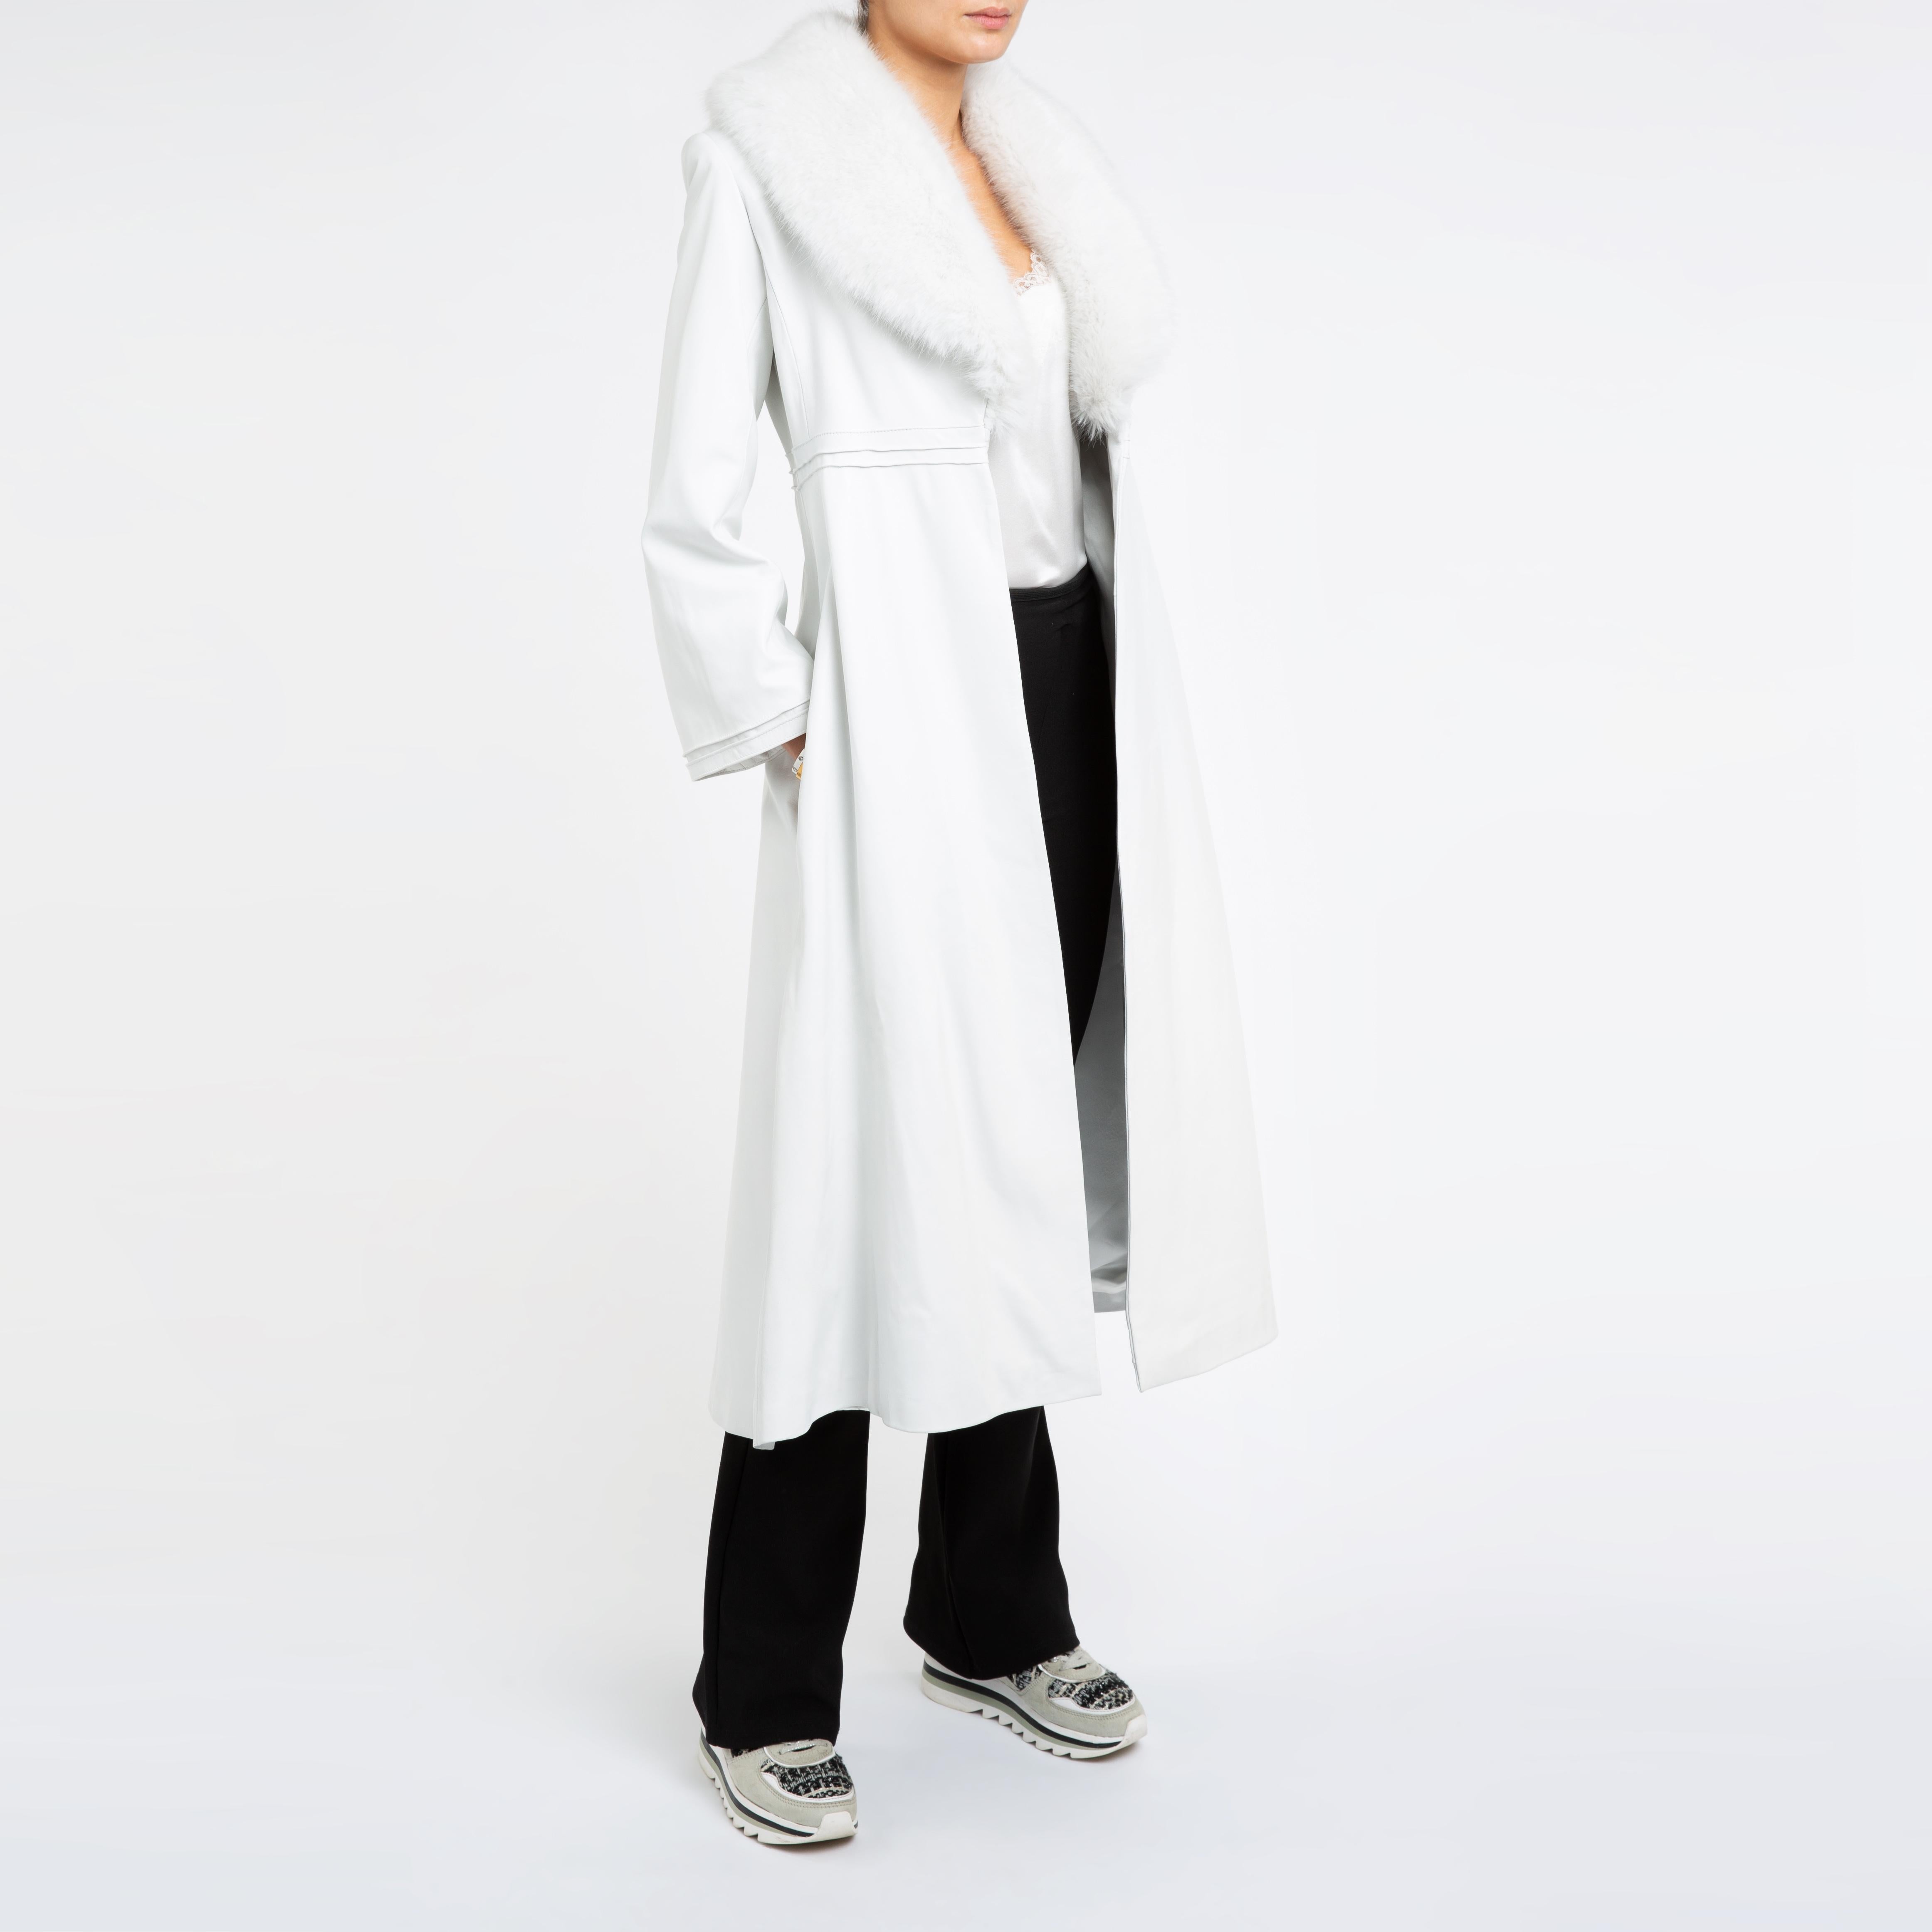 Verheyen London Edward Leather Coat in Aquamarine & White Faux Fur - Size 8 UK  3